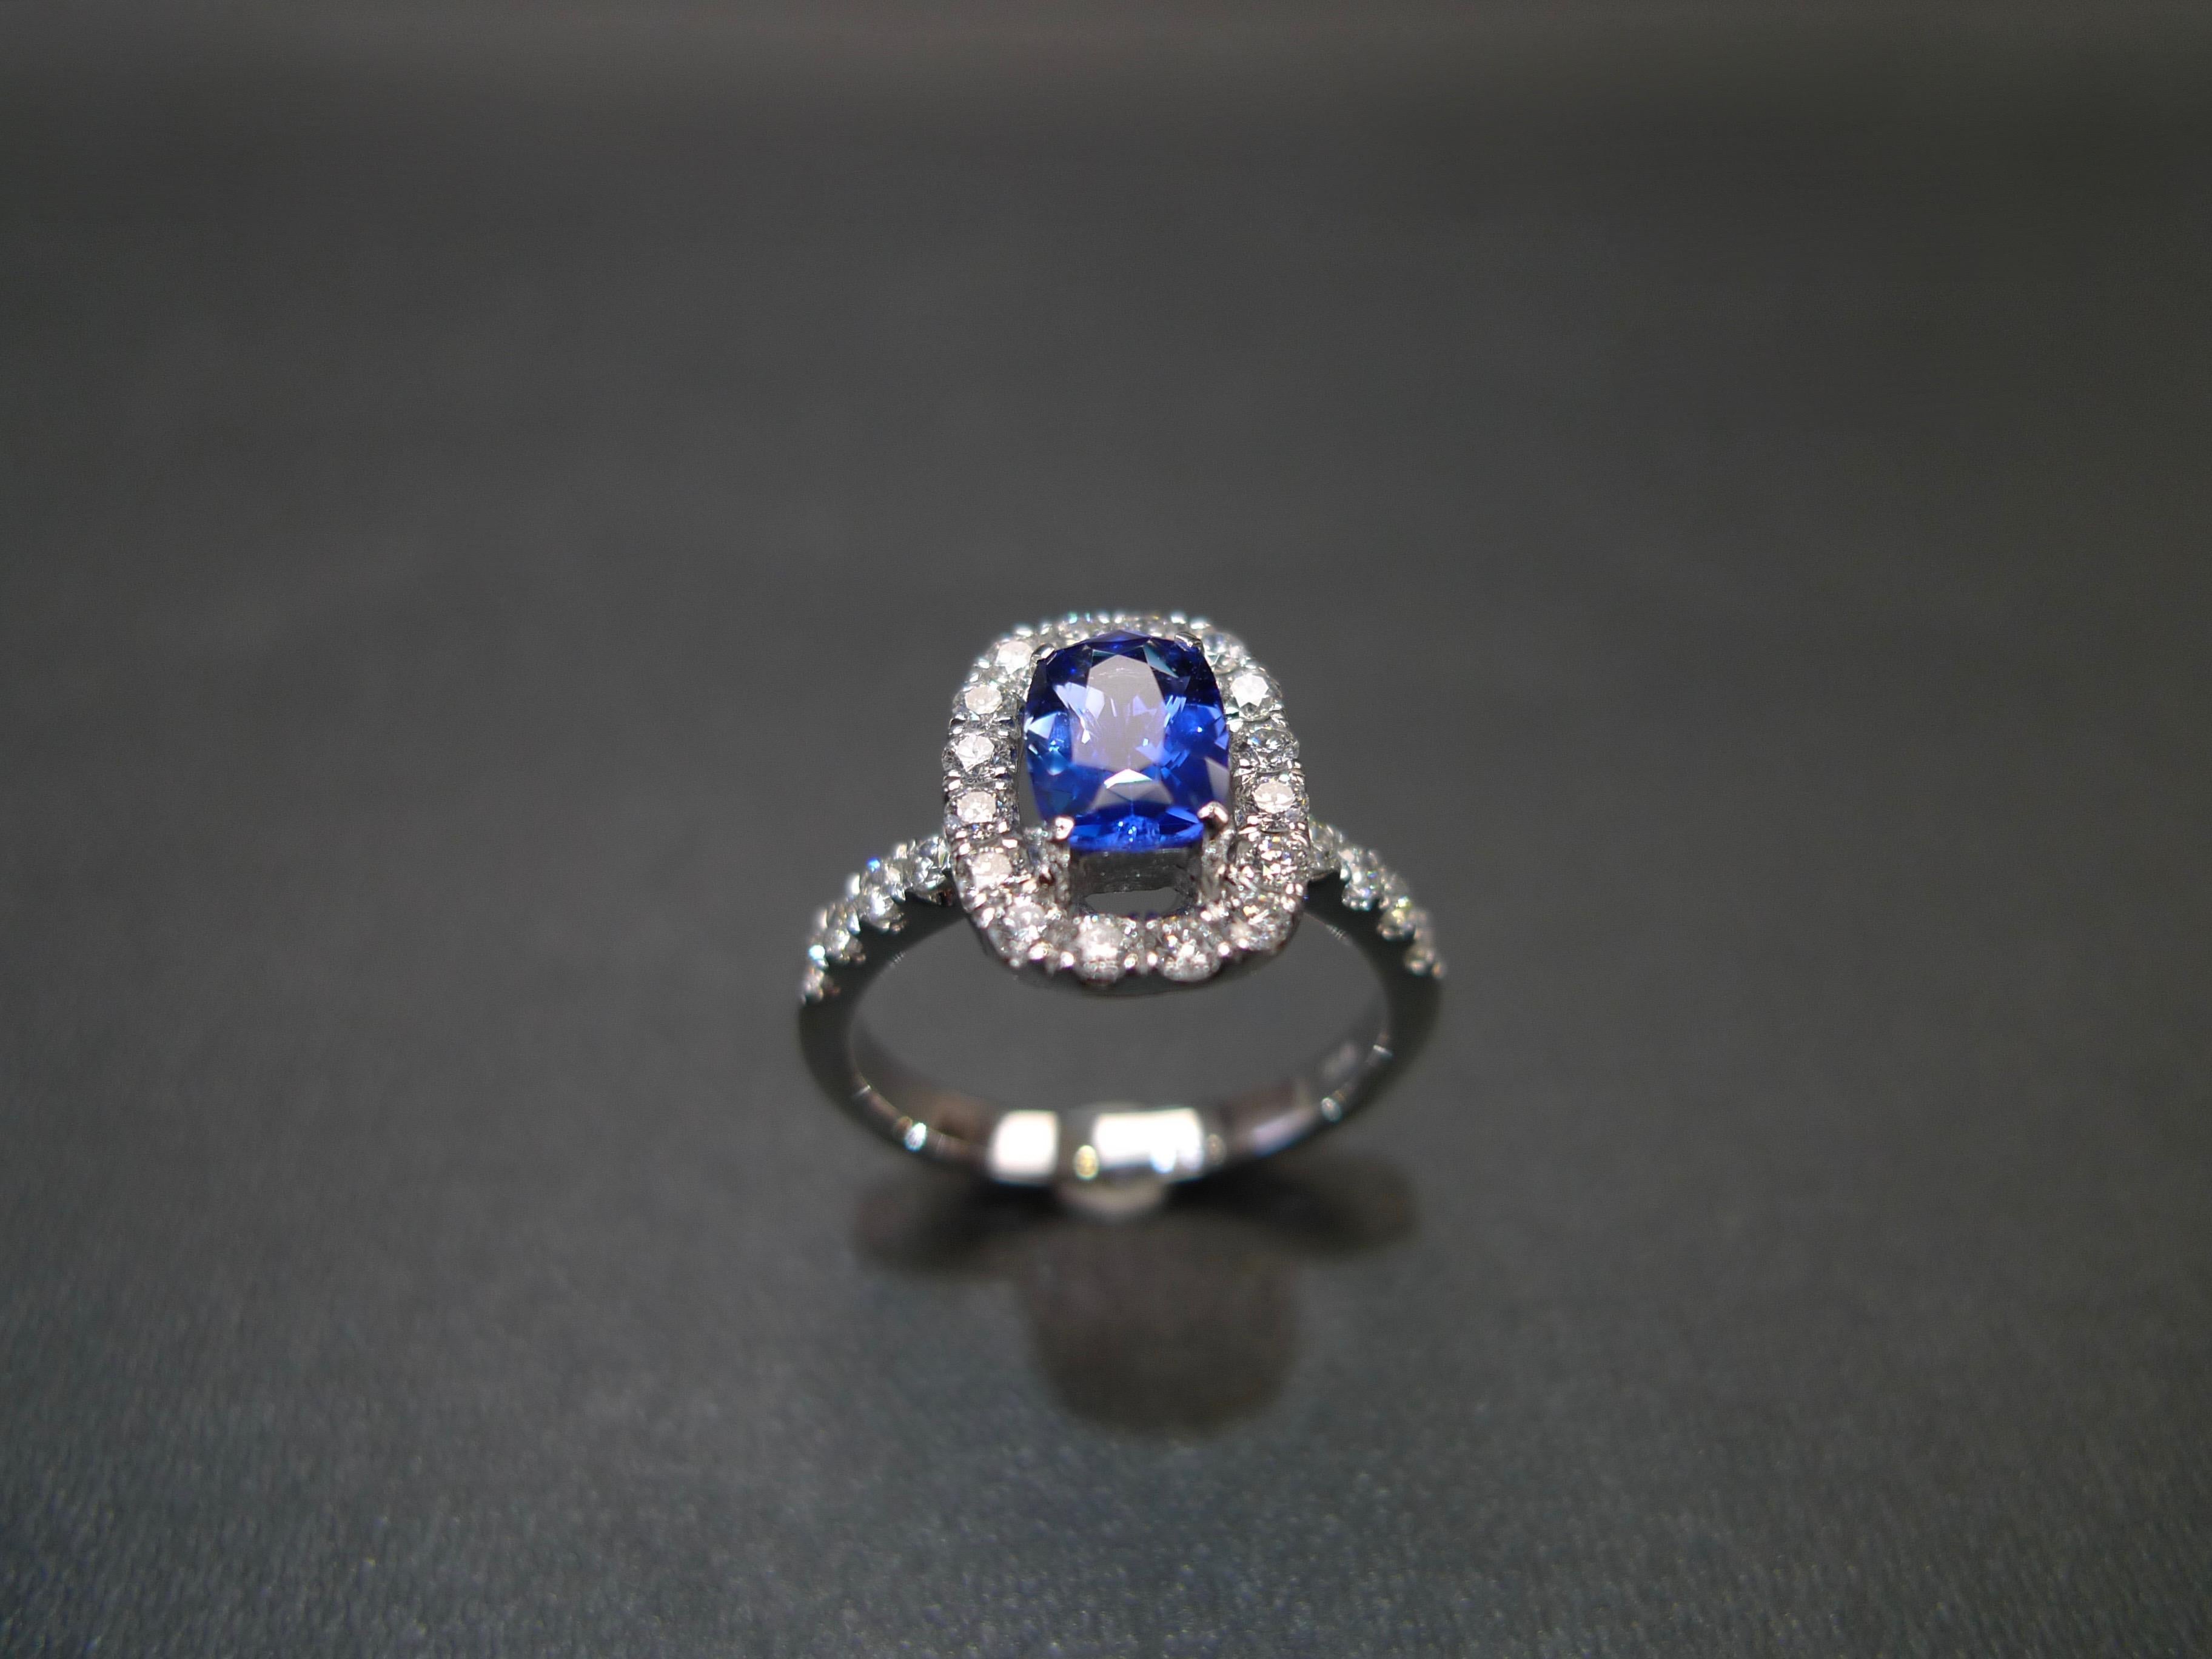 For Sale:  Cushion Cut Natural Burma Blue Sapphire Diamond Halo Engagement Ring White Gold 8